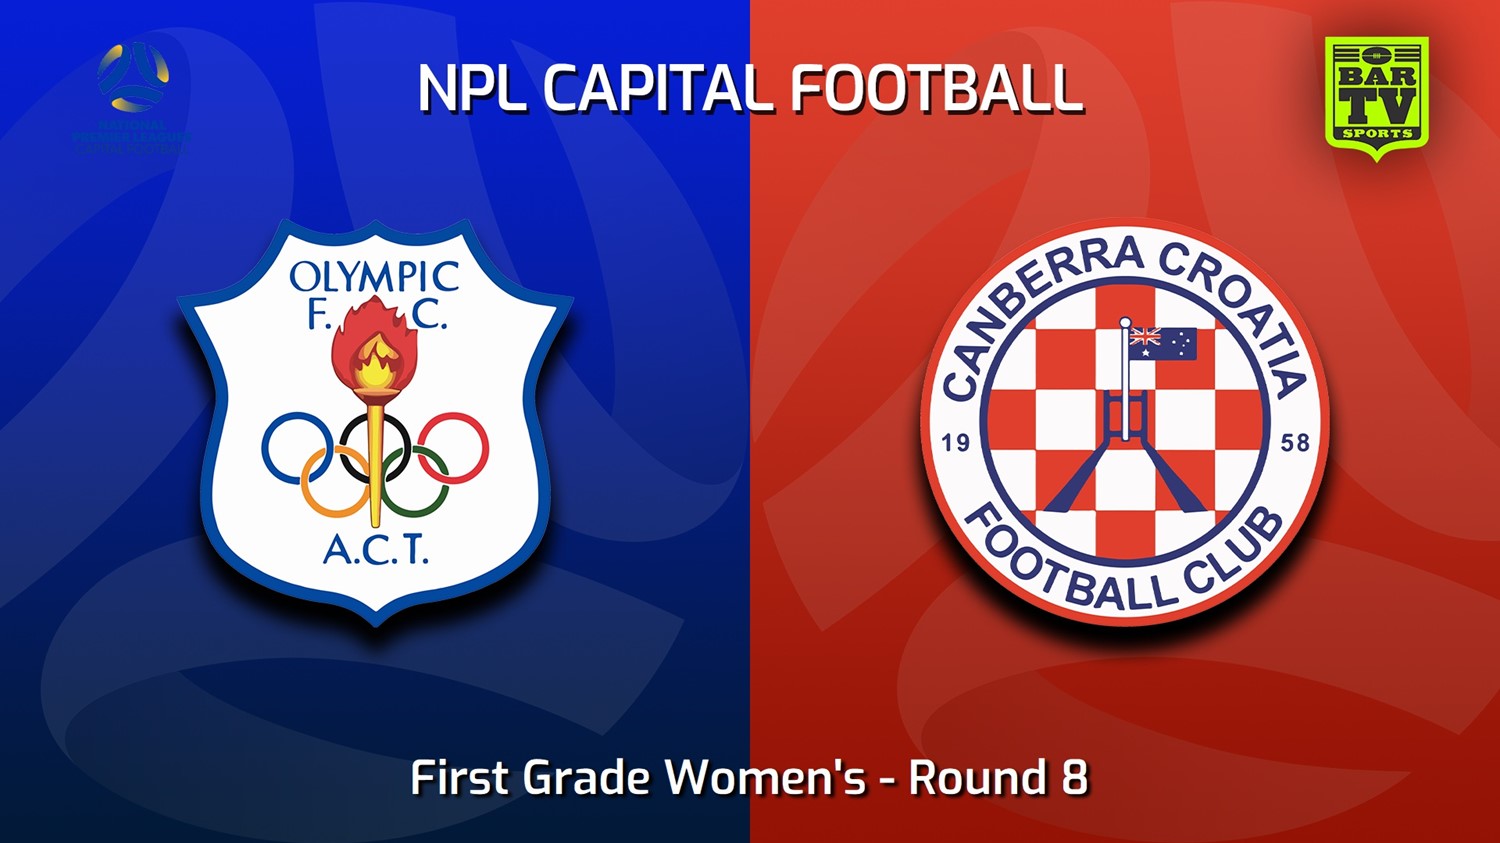 230528-Capital Womens Round 8 - Canberra Olympic FC (women) v Canberra Croaita FC (women) Minigame Slate Image